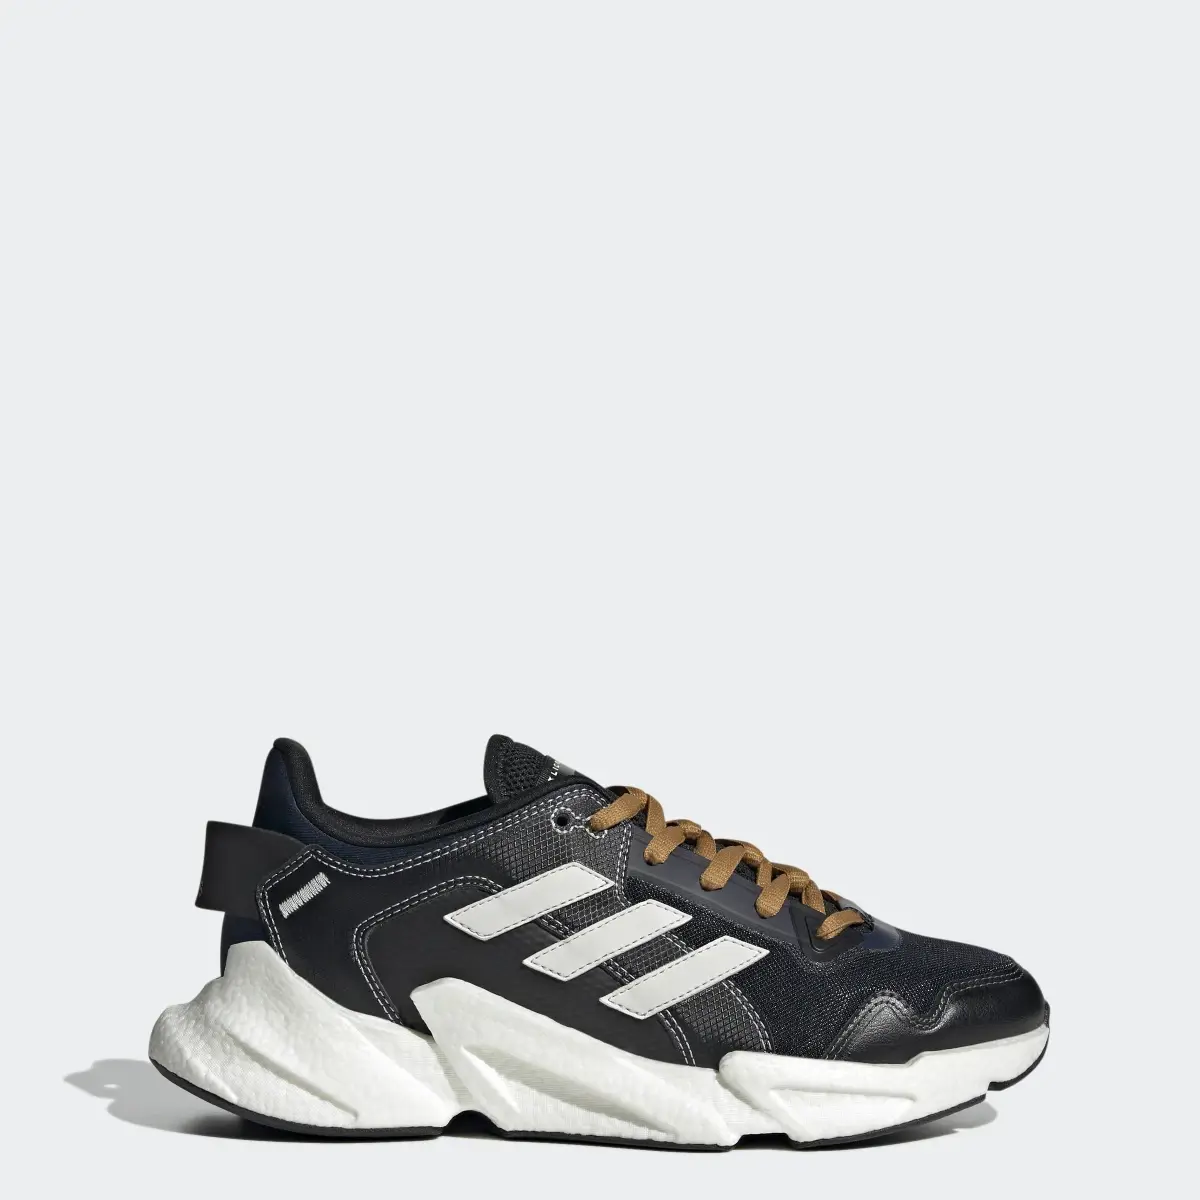 Adidas Karlie Kloss X9000 Shoes. 1